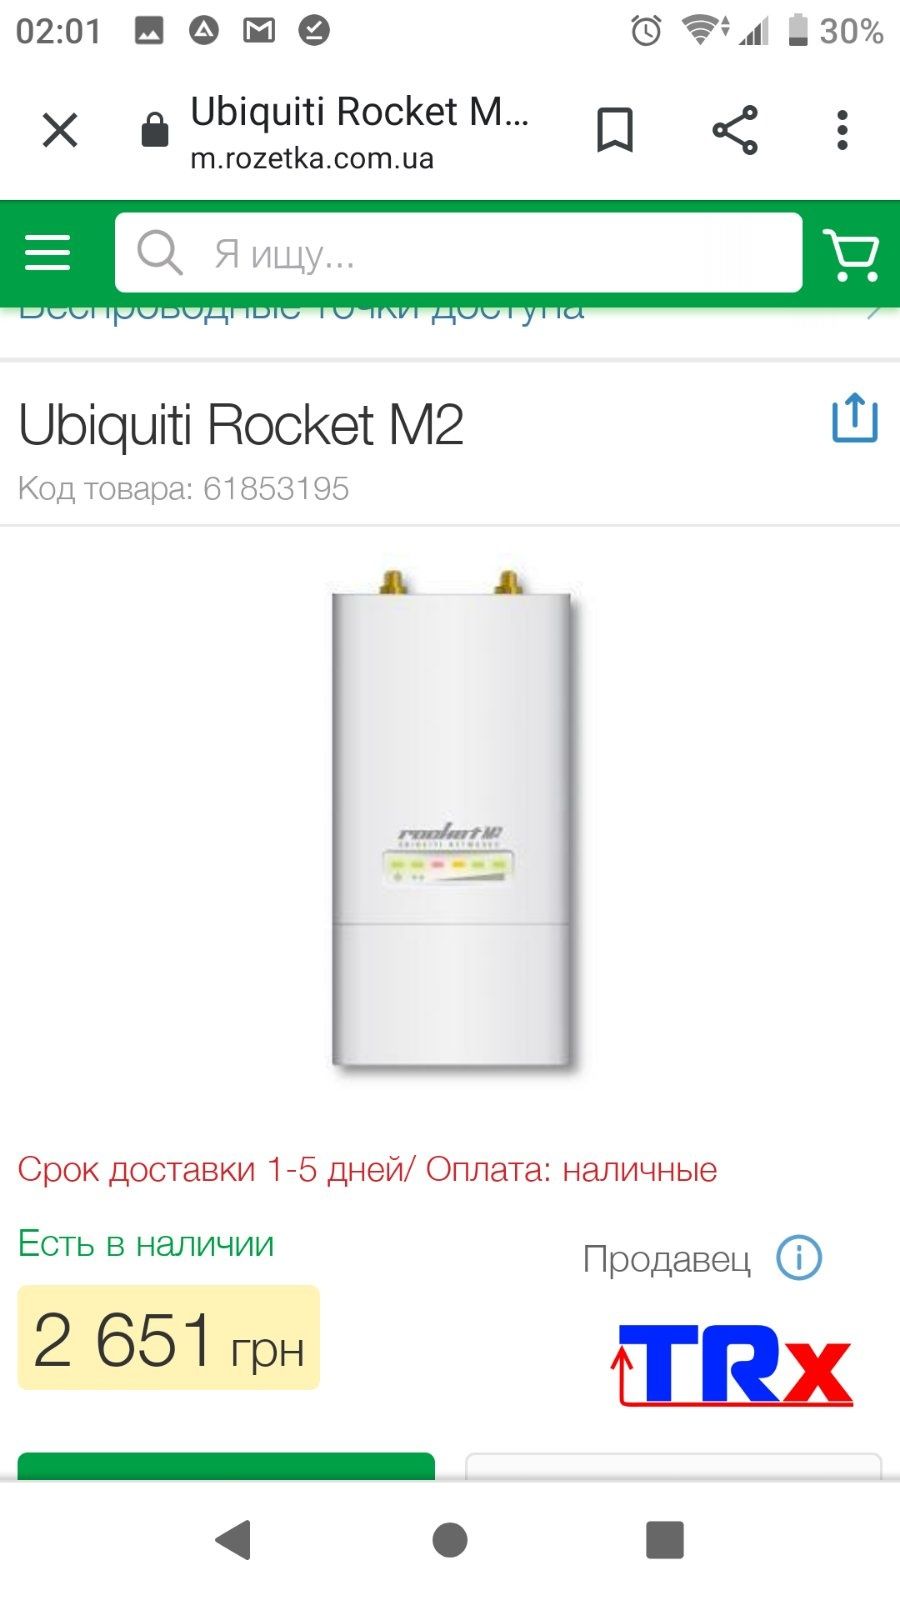 Ubiquiti rocket M2